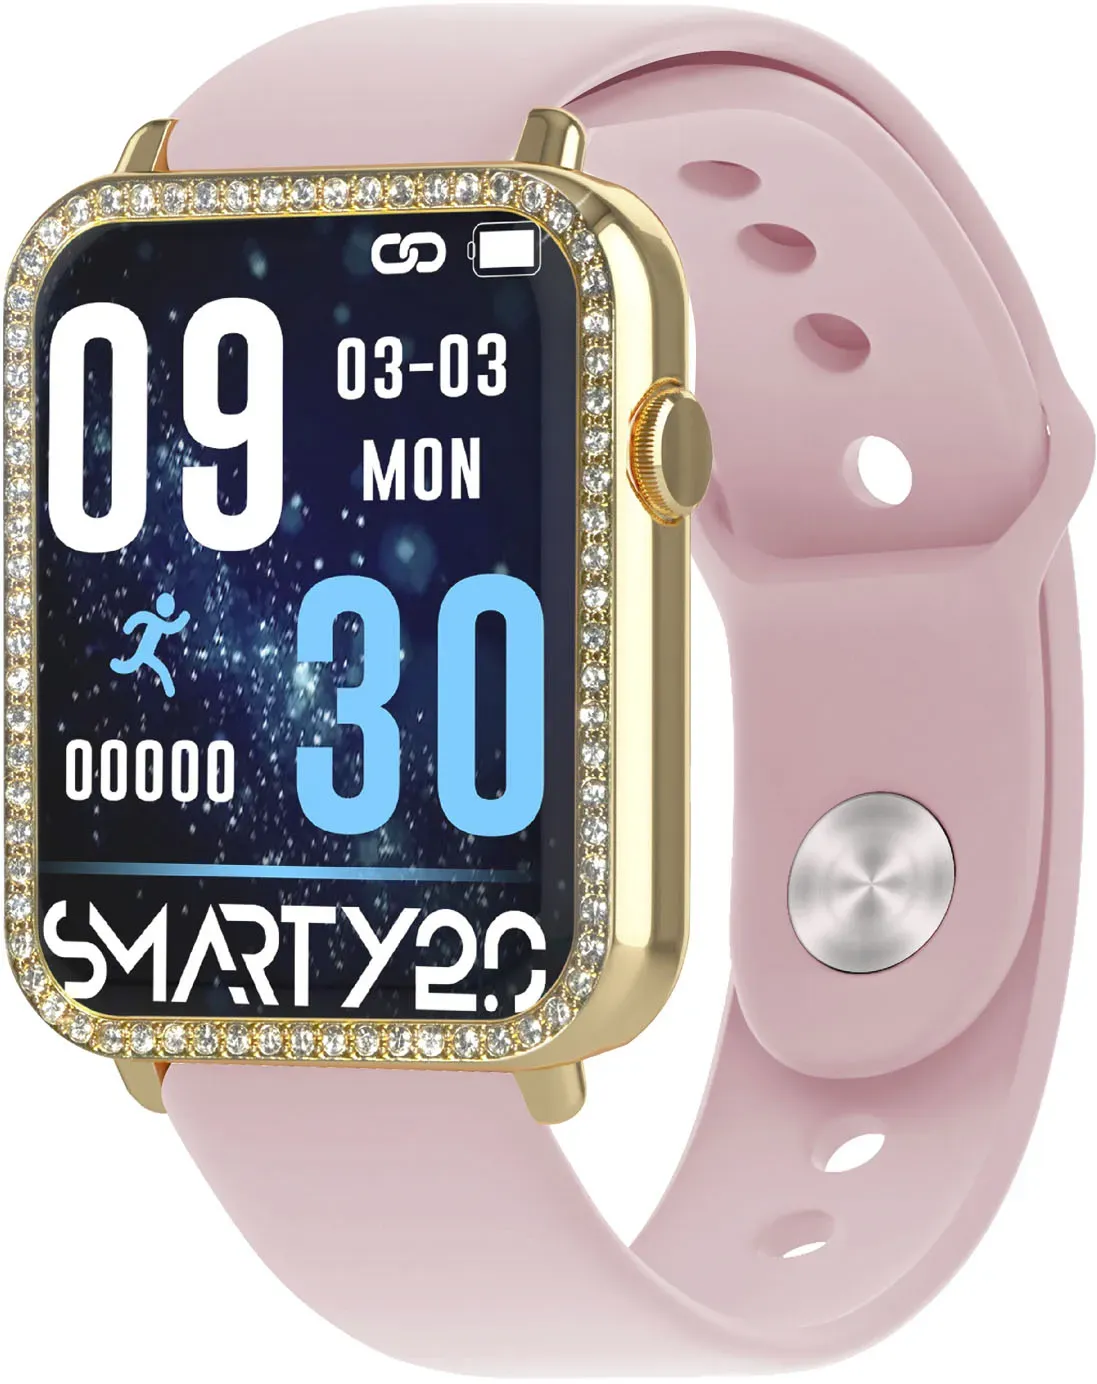 Smartwatch SMARTY 2.0 "SMARTY 2.0, SW035I03" Smartwatches rosa Fitness-Tracker